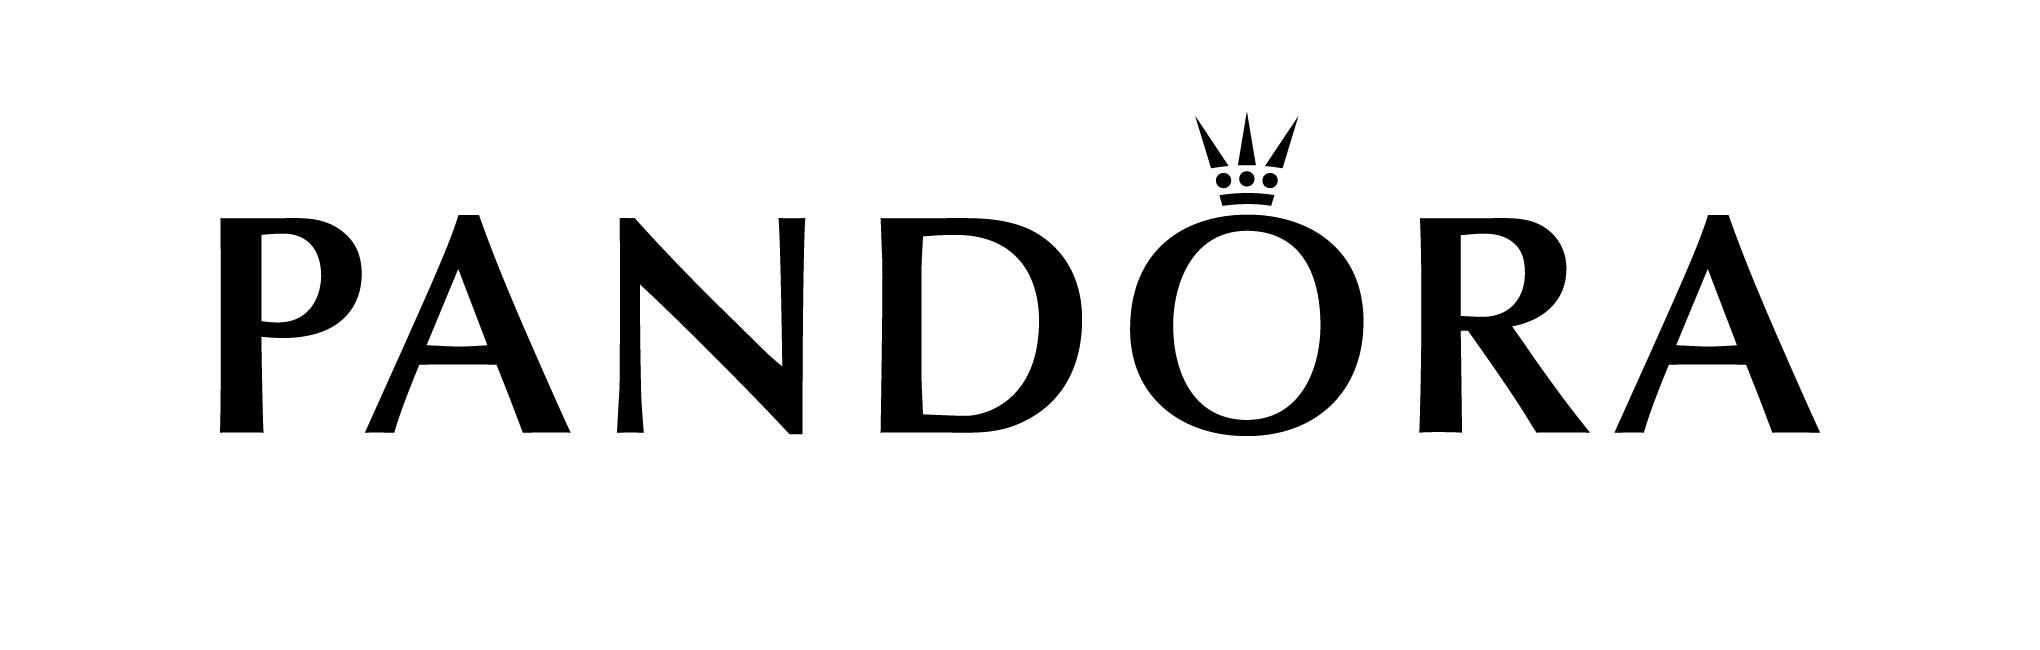 Pandora Jewelry Logo - Pandora Logo, symbol, meaning, History and Evolution